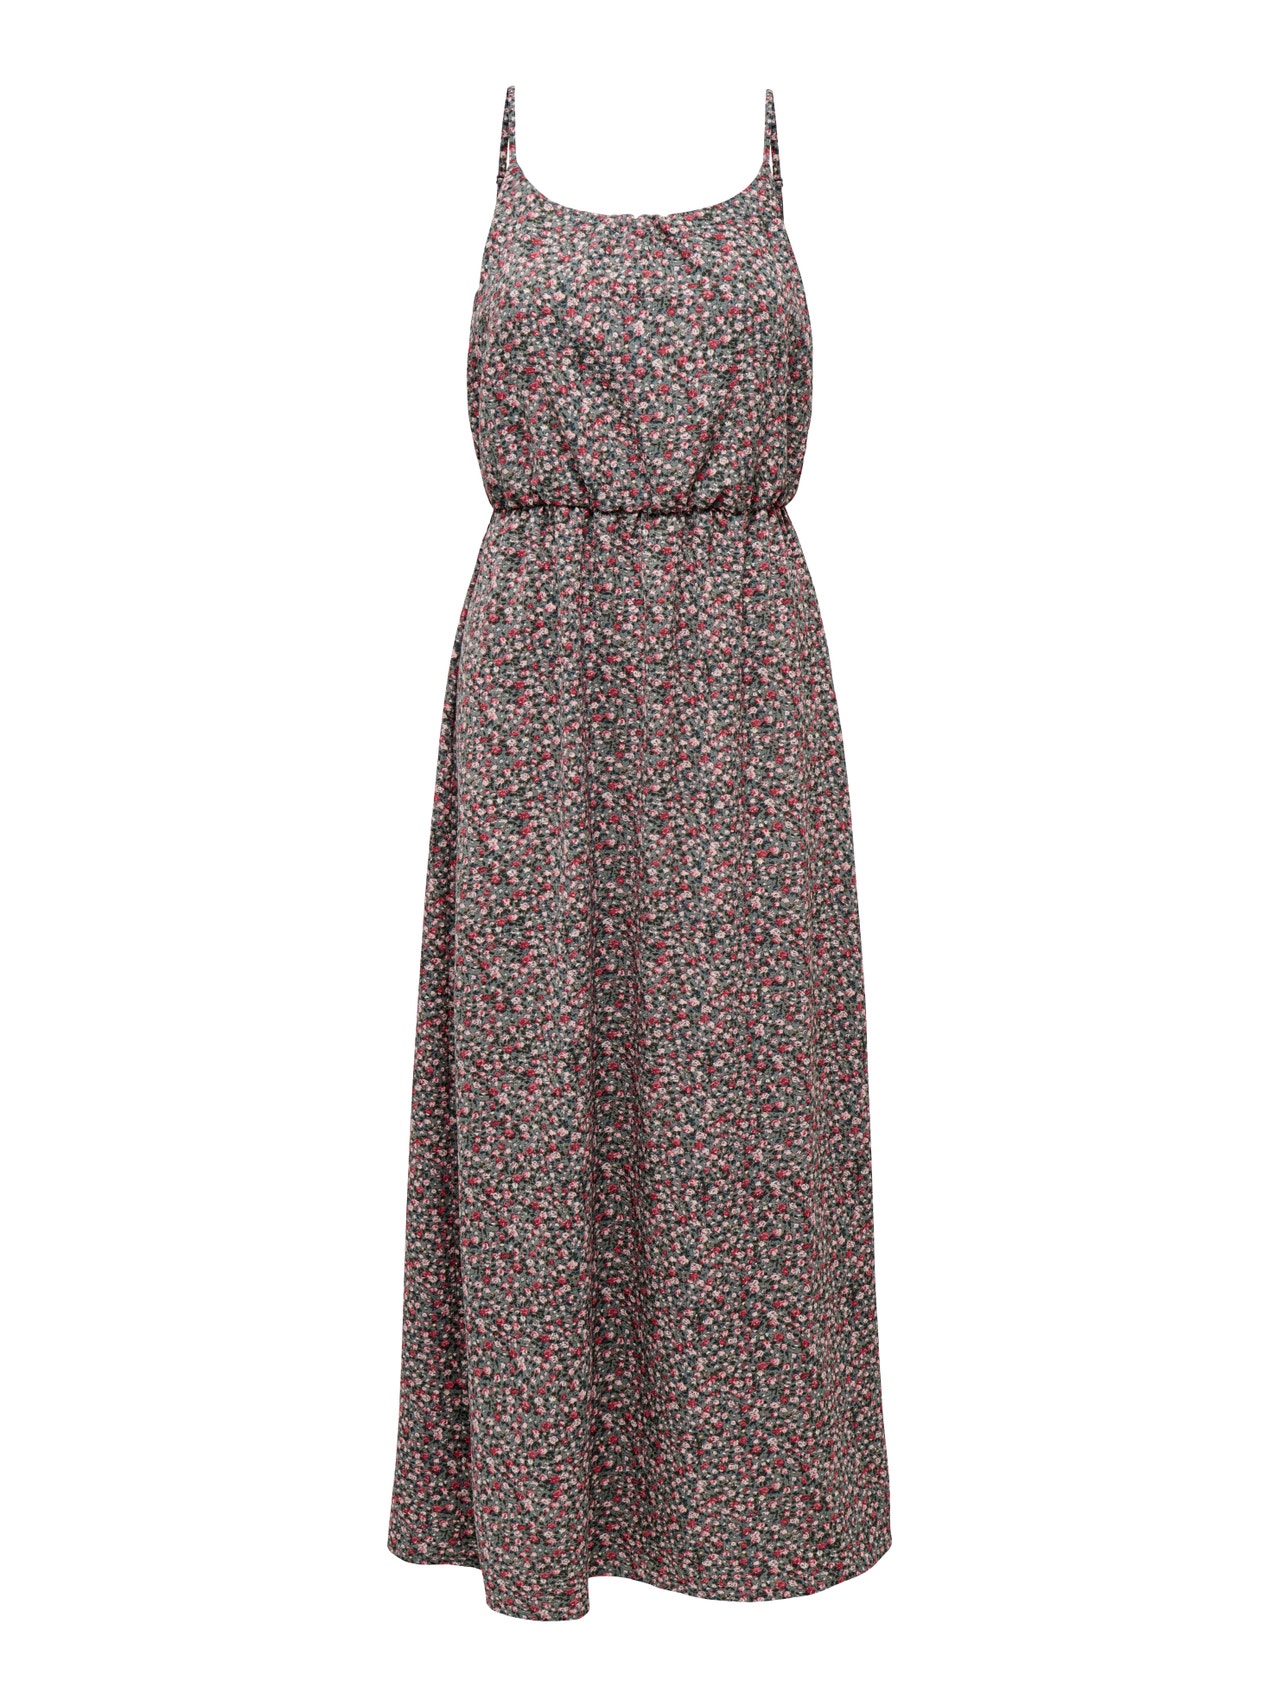 ONLY Maxi kjole med mønster -Balsam Green - 15222219